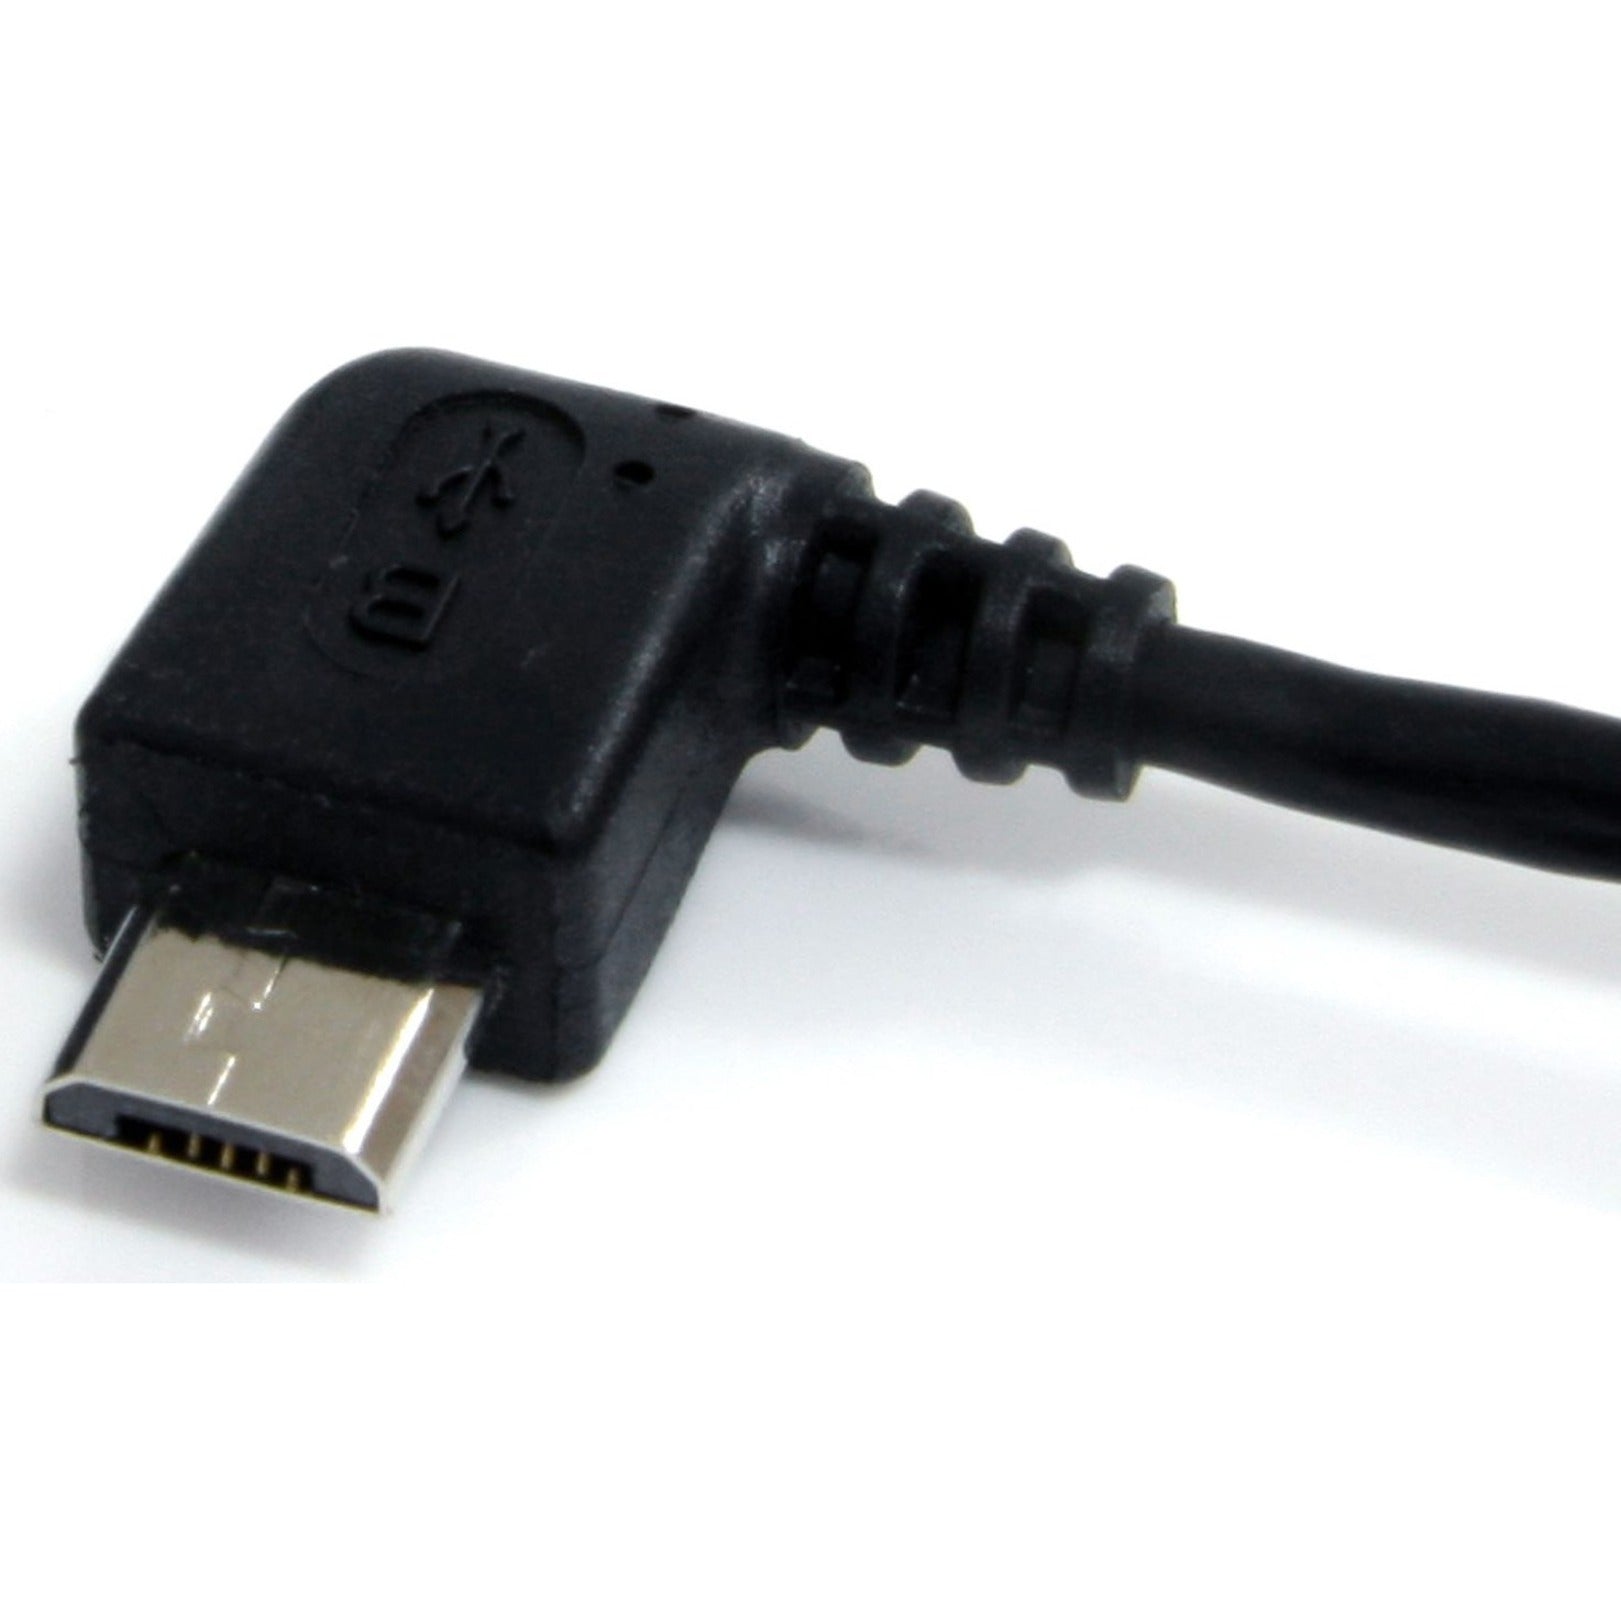 Marque: StarTech.com Câble micro USB de 6 pi - A vers micro B à angle gauche Charge Relief de tension Moulé